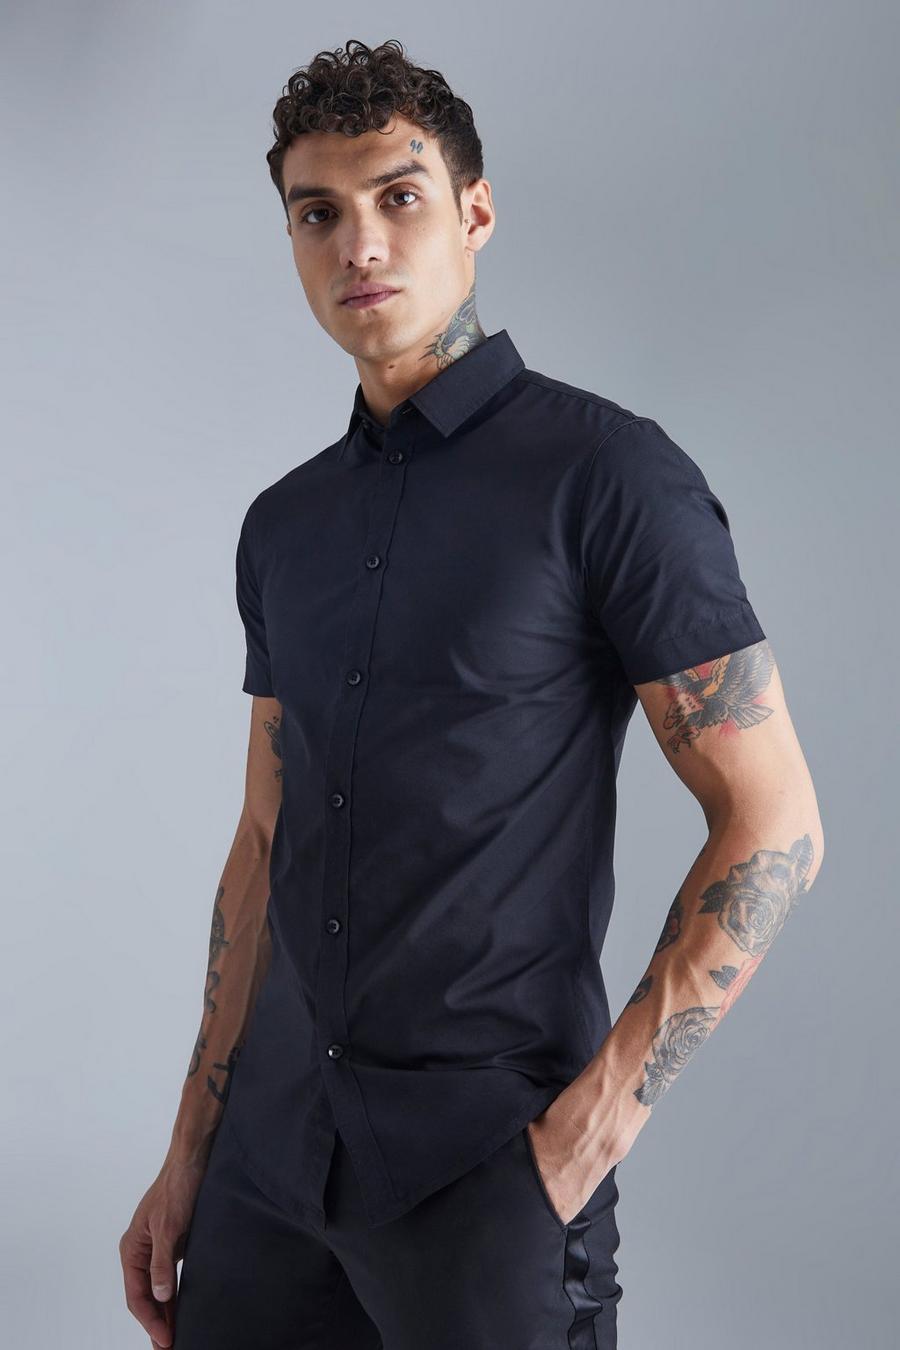 Black negro Short Sleeve Muscle Shirt